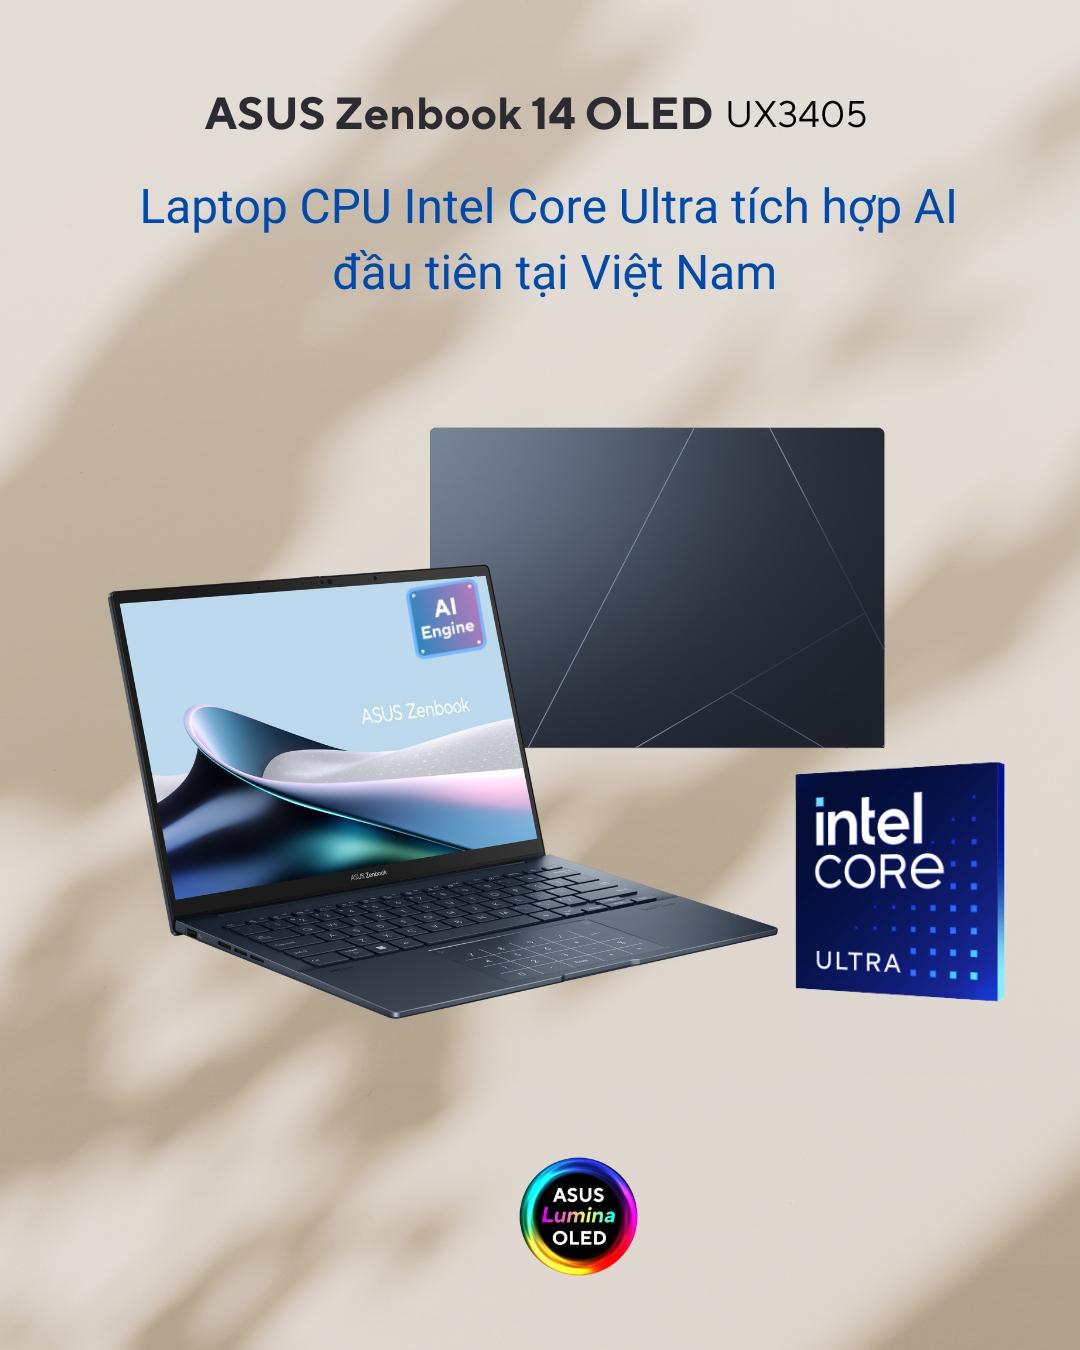 May be an image of text that says 'ASUS Zenbook 14 OLED UX3405 Laptop CPU Intel Core Ultra tích hợp AI đầu tiên tại Việt Nam AI A Engine ASUSZenbook ASUS intel CORE ULTRA ASUS ASUS umina OLED'